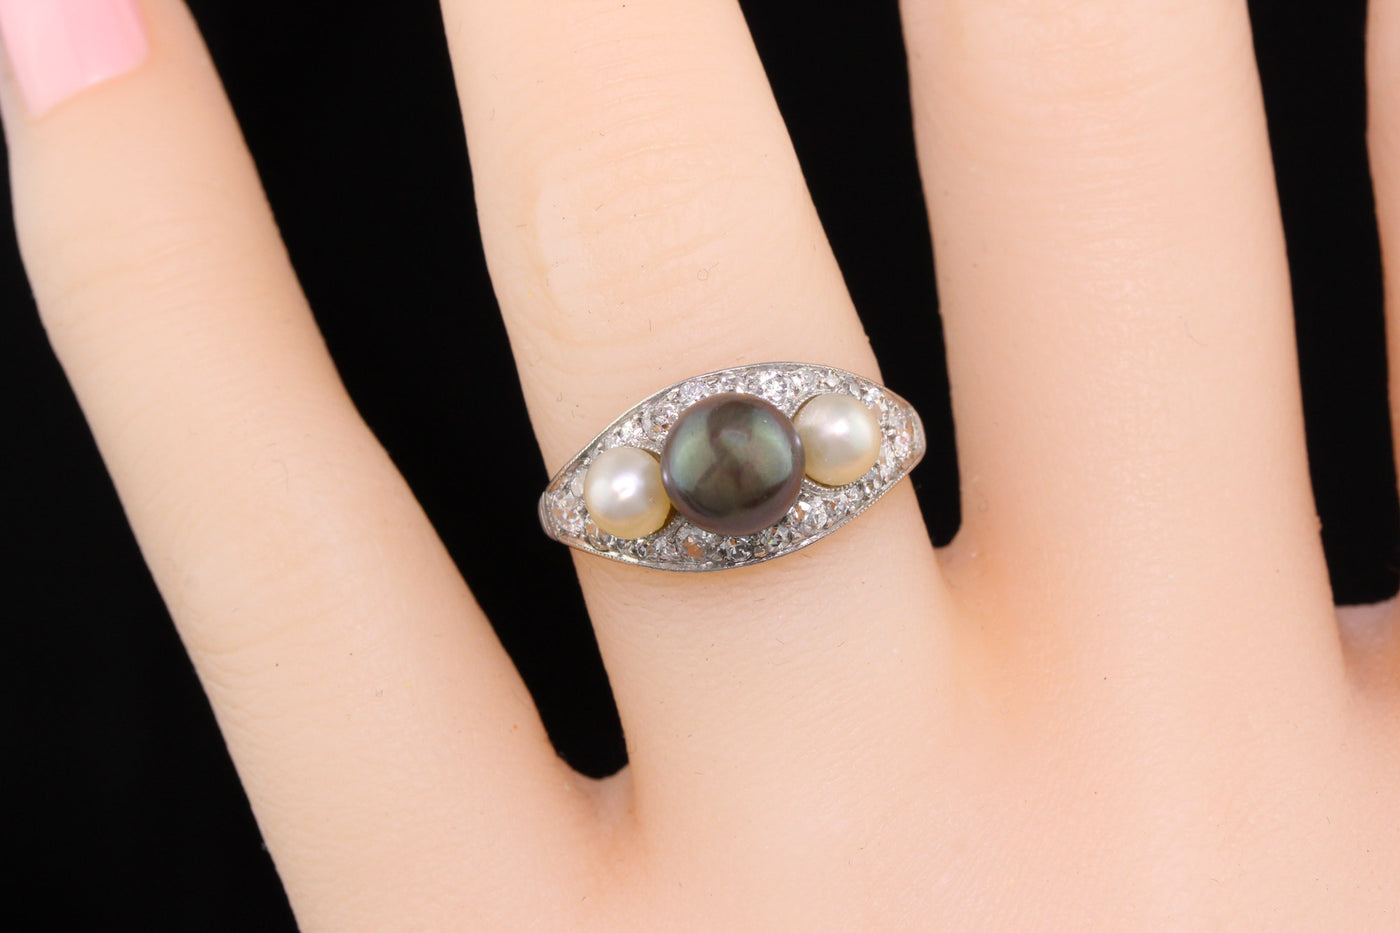 Antique Edwardian Platinum, Diamond & Pearl 3-stone Ring - The Antique Parlour